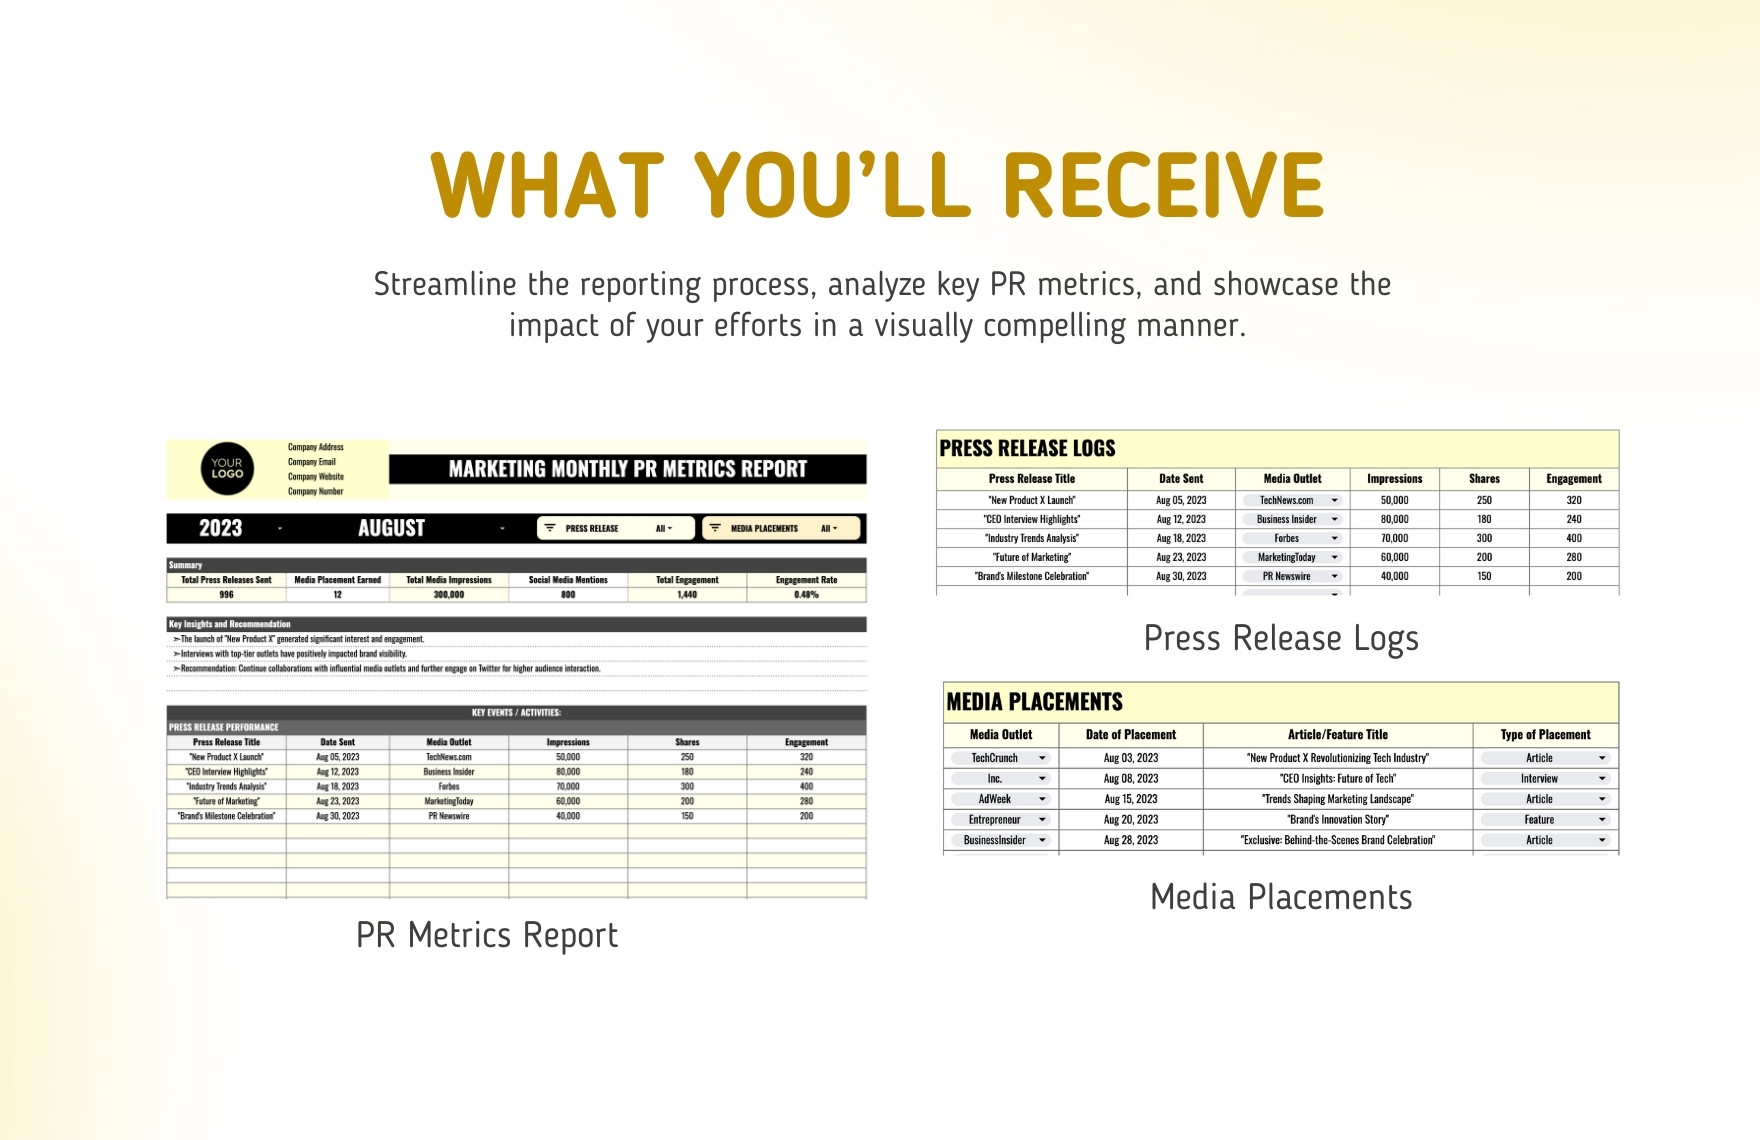 Marketing Monthly PR Metrics Report Template